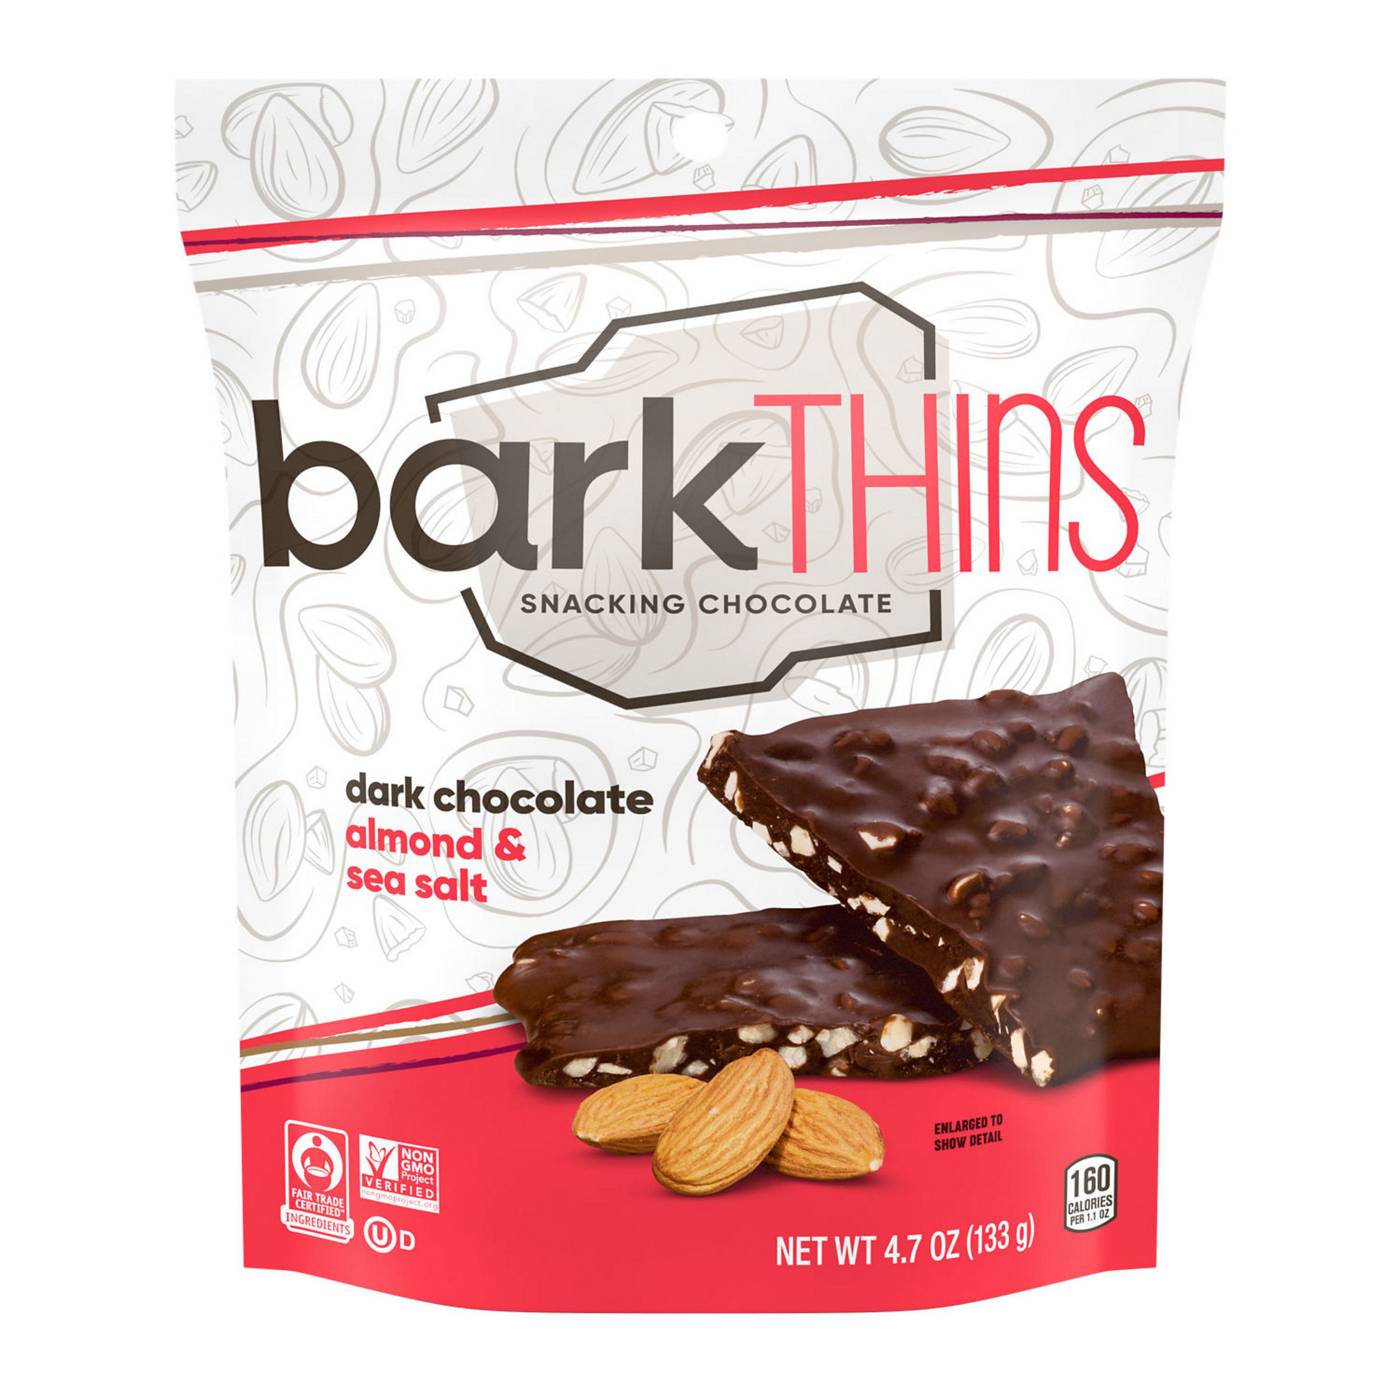 Barkthins Dark Chocolate Almond & Sea Salt Snacking Chocolate Bag; image 1 of 7